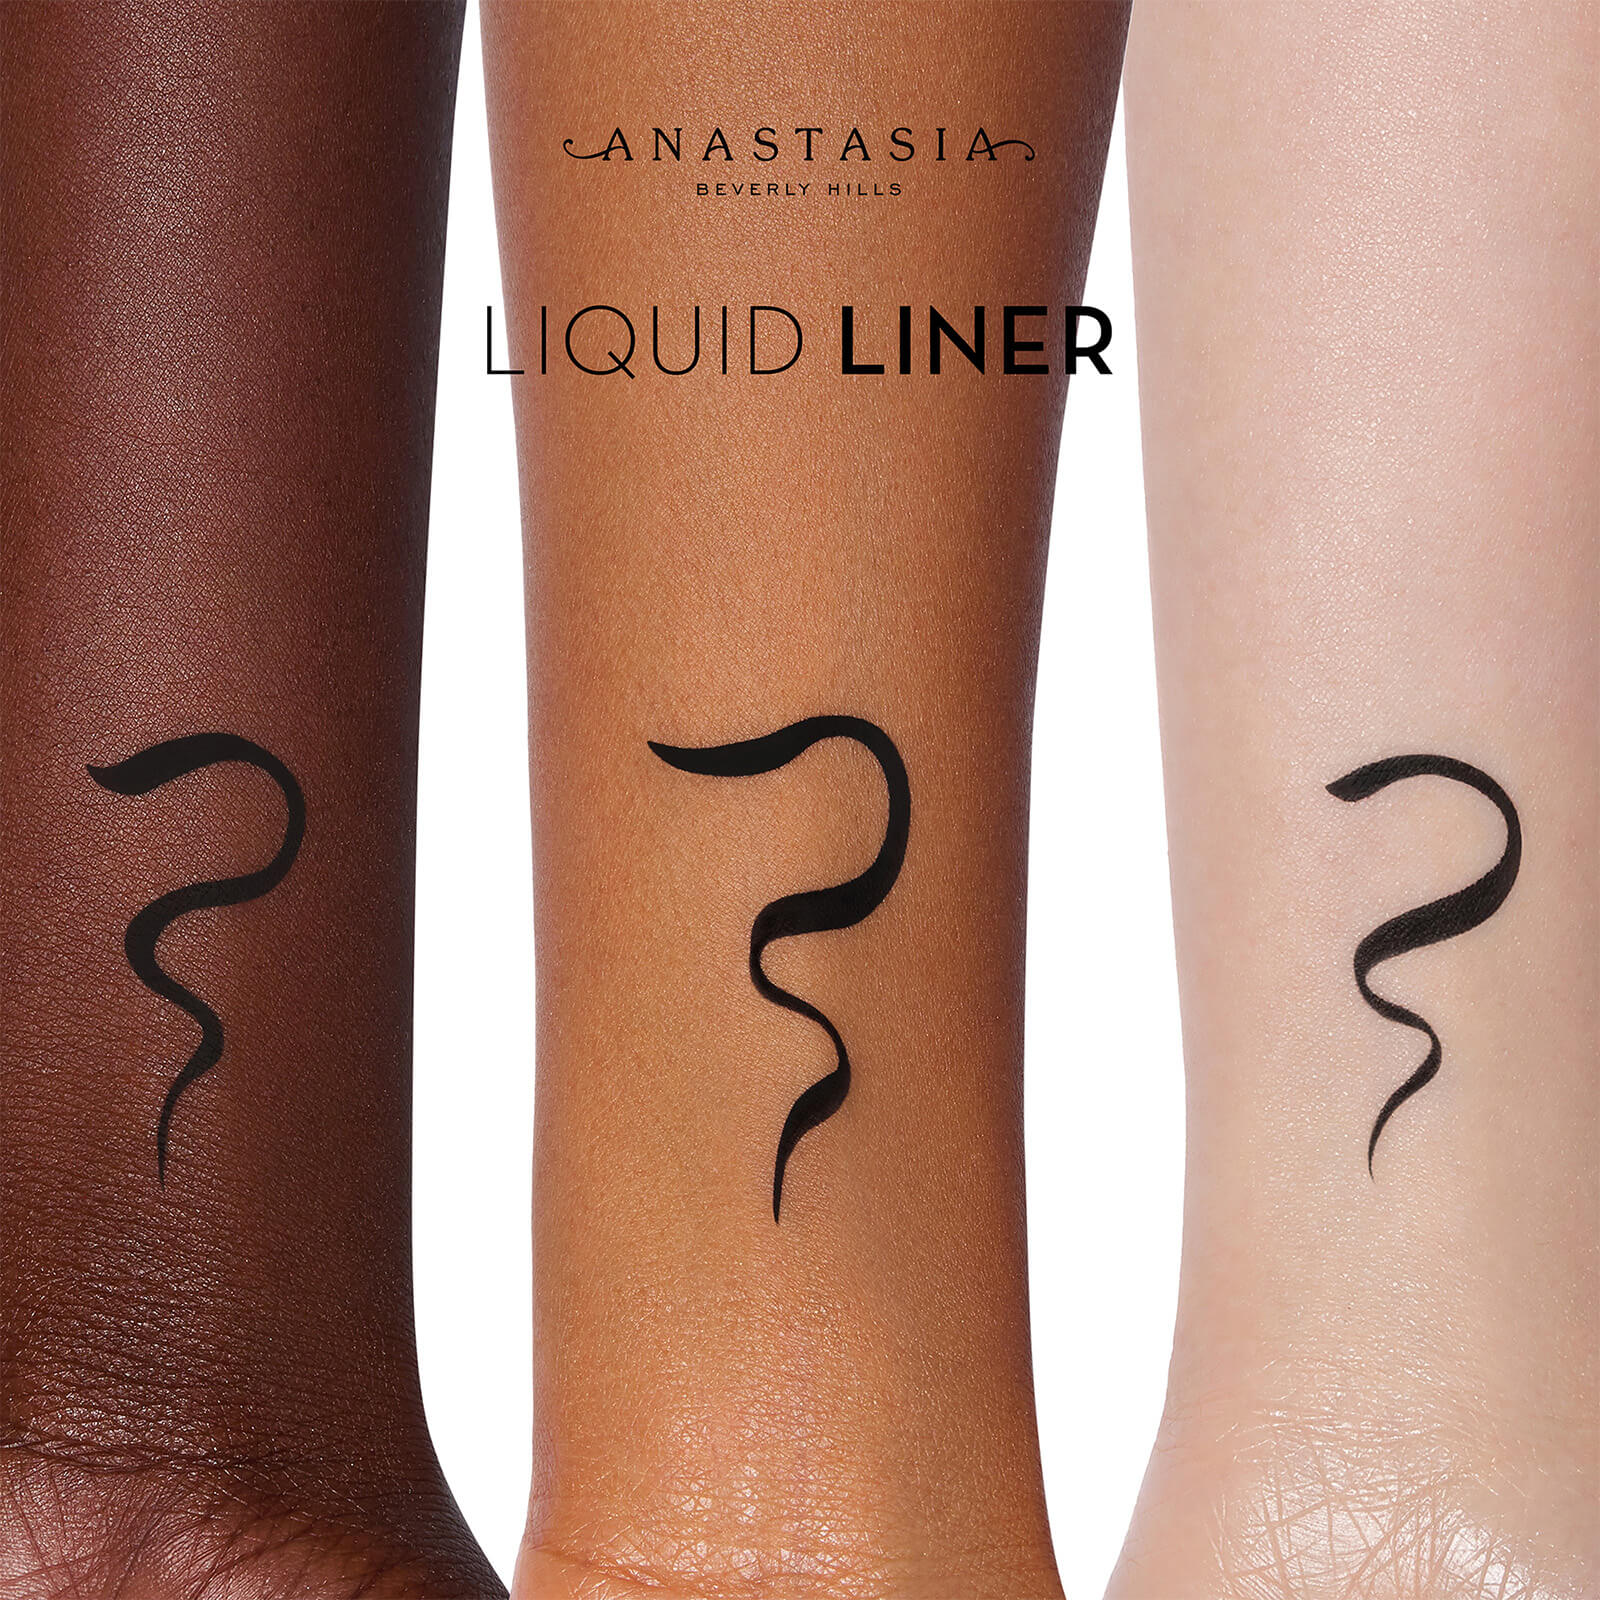 Liquid Liner shades